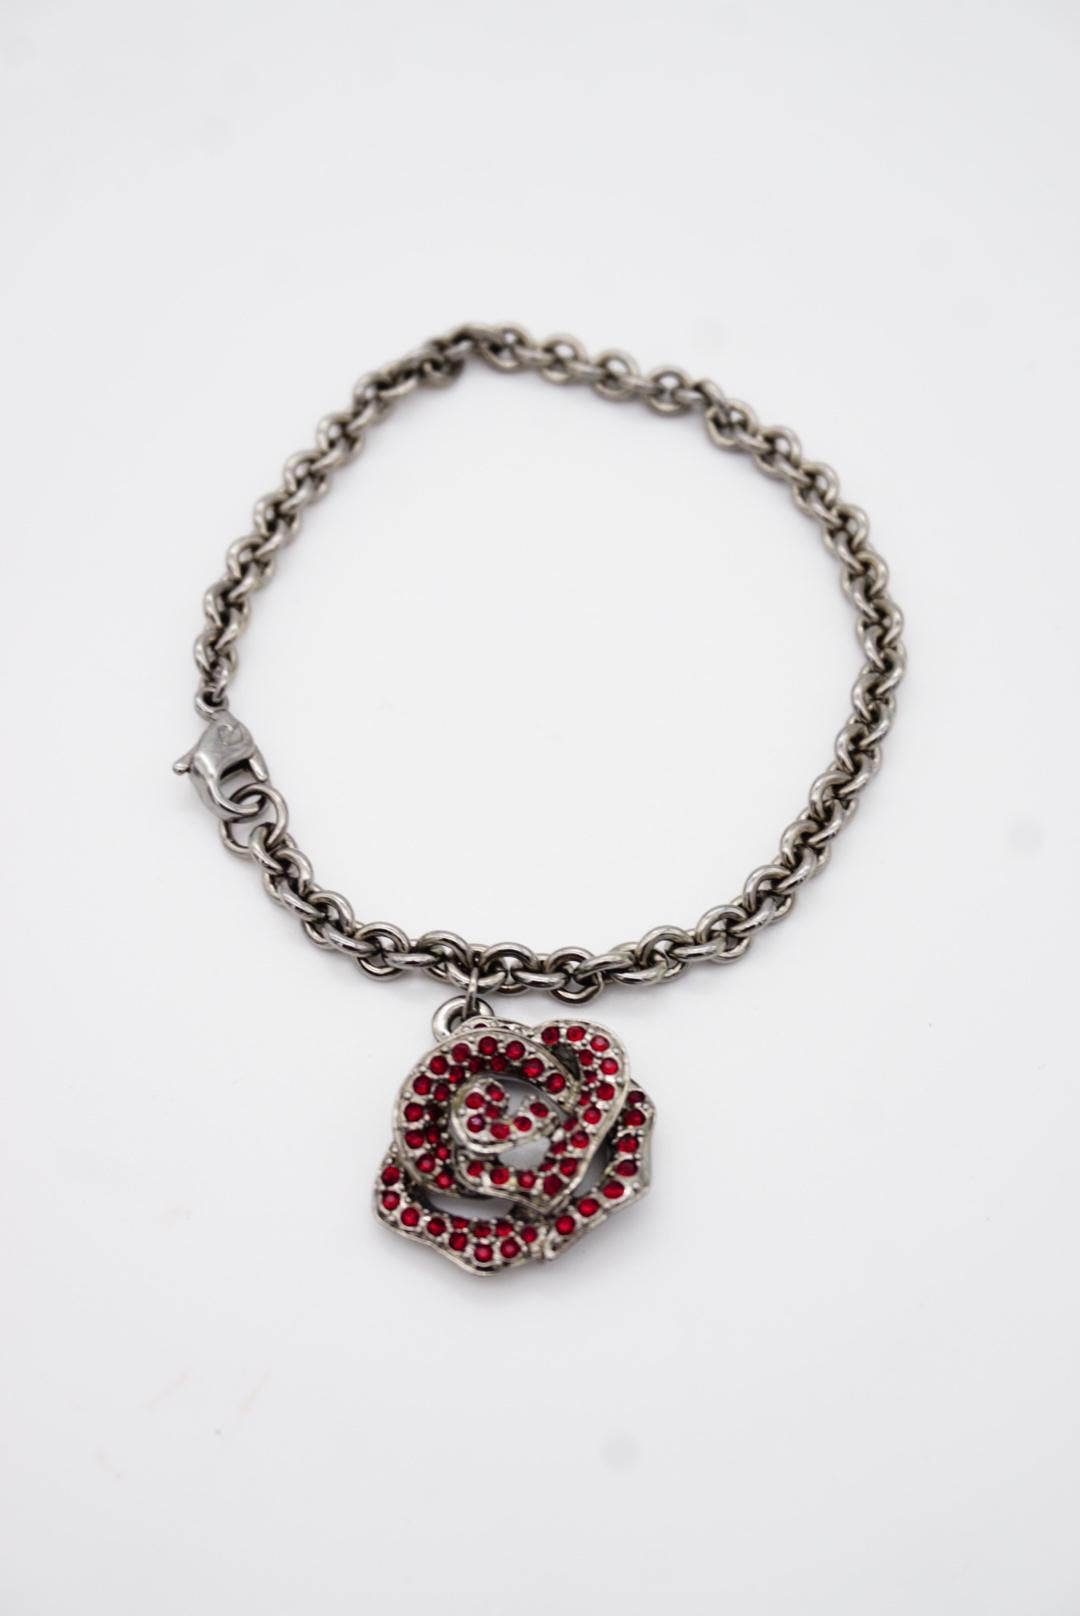 Swarovski Vintage Vivid Rose Red Crystal Pendant Charm Hollow Silver Bracelet In Excellent Condition For Sale In Wokingham, England